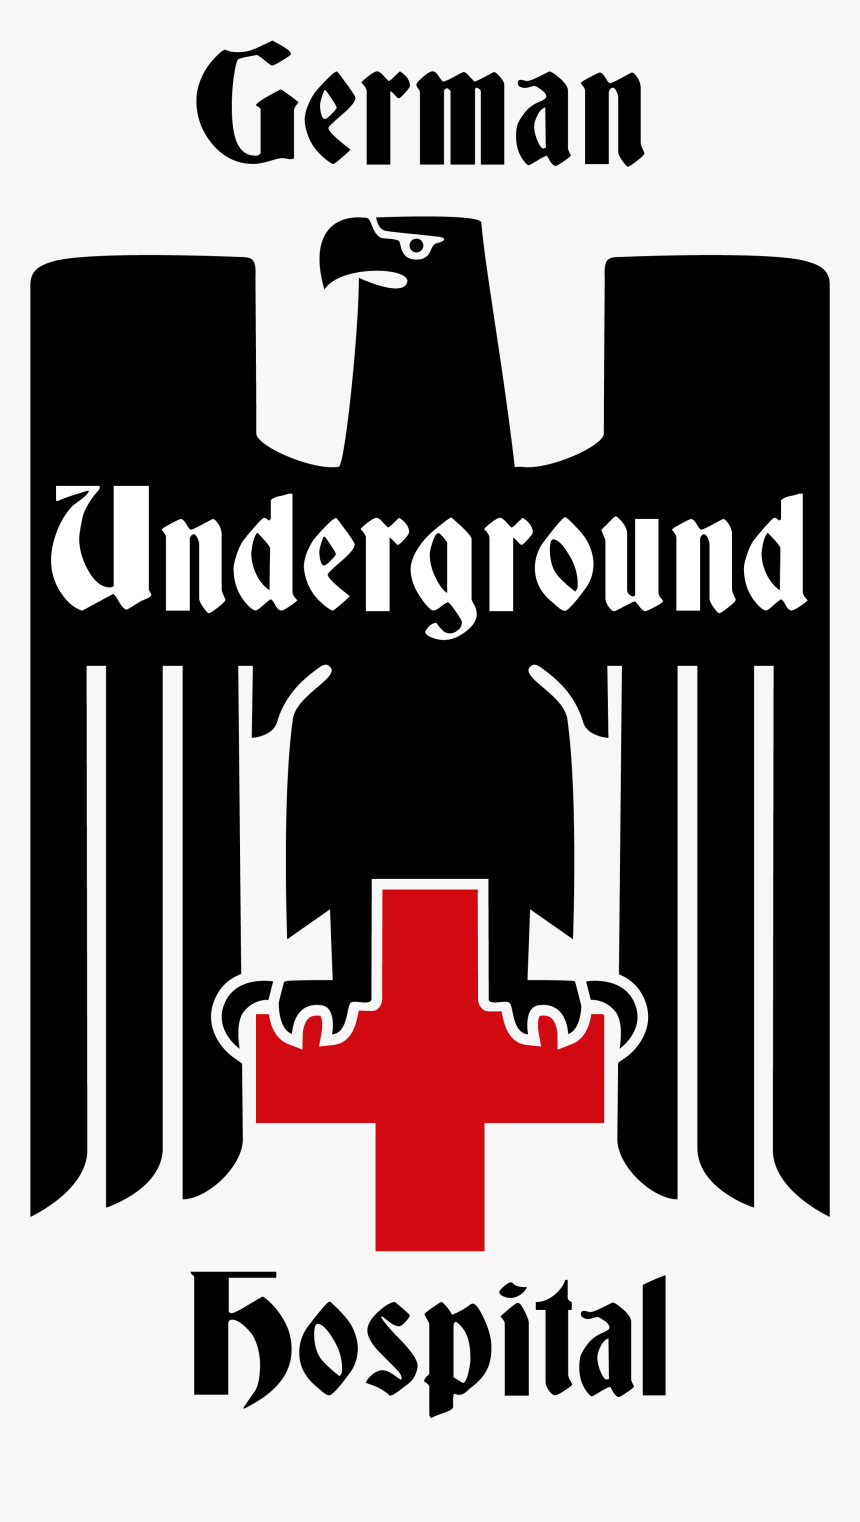 German Underground Hospital Guernsey, HD Png Download, Free Download